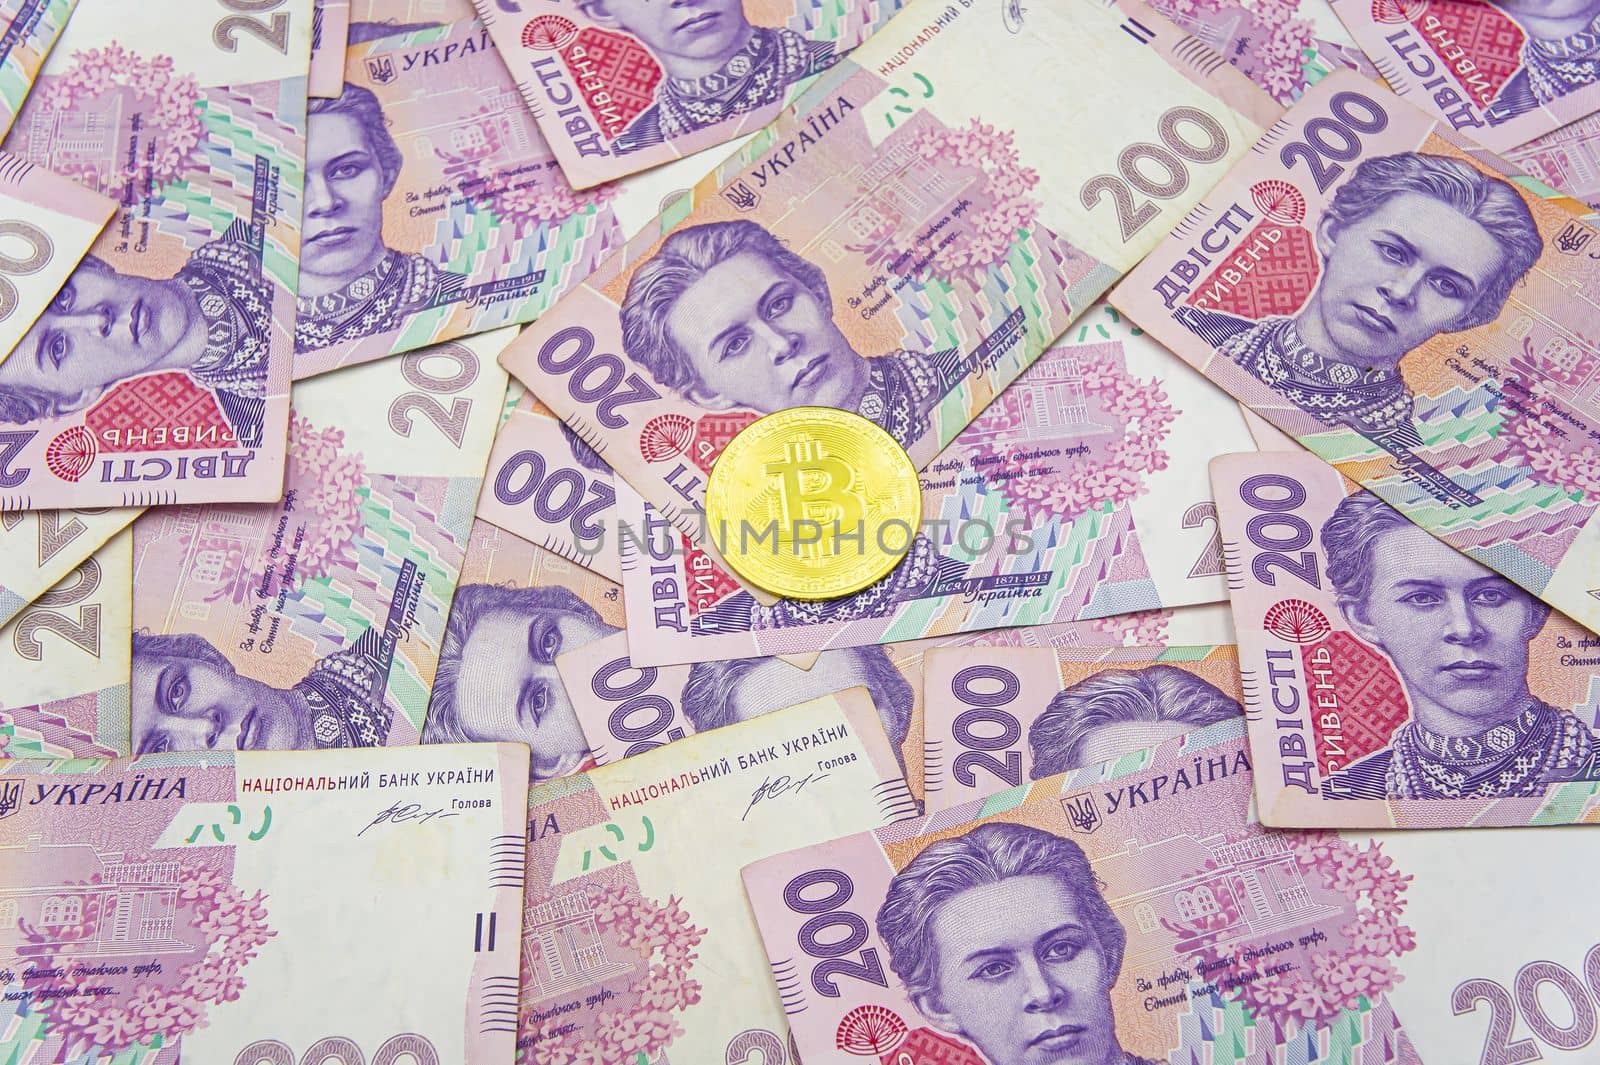 Golden bitcoin on two hundred ukrainian hryvnia bills background by mr-tigga